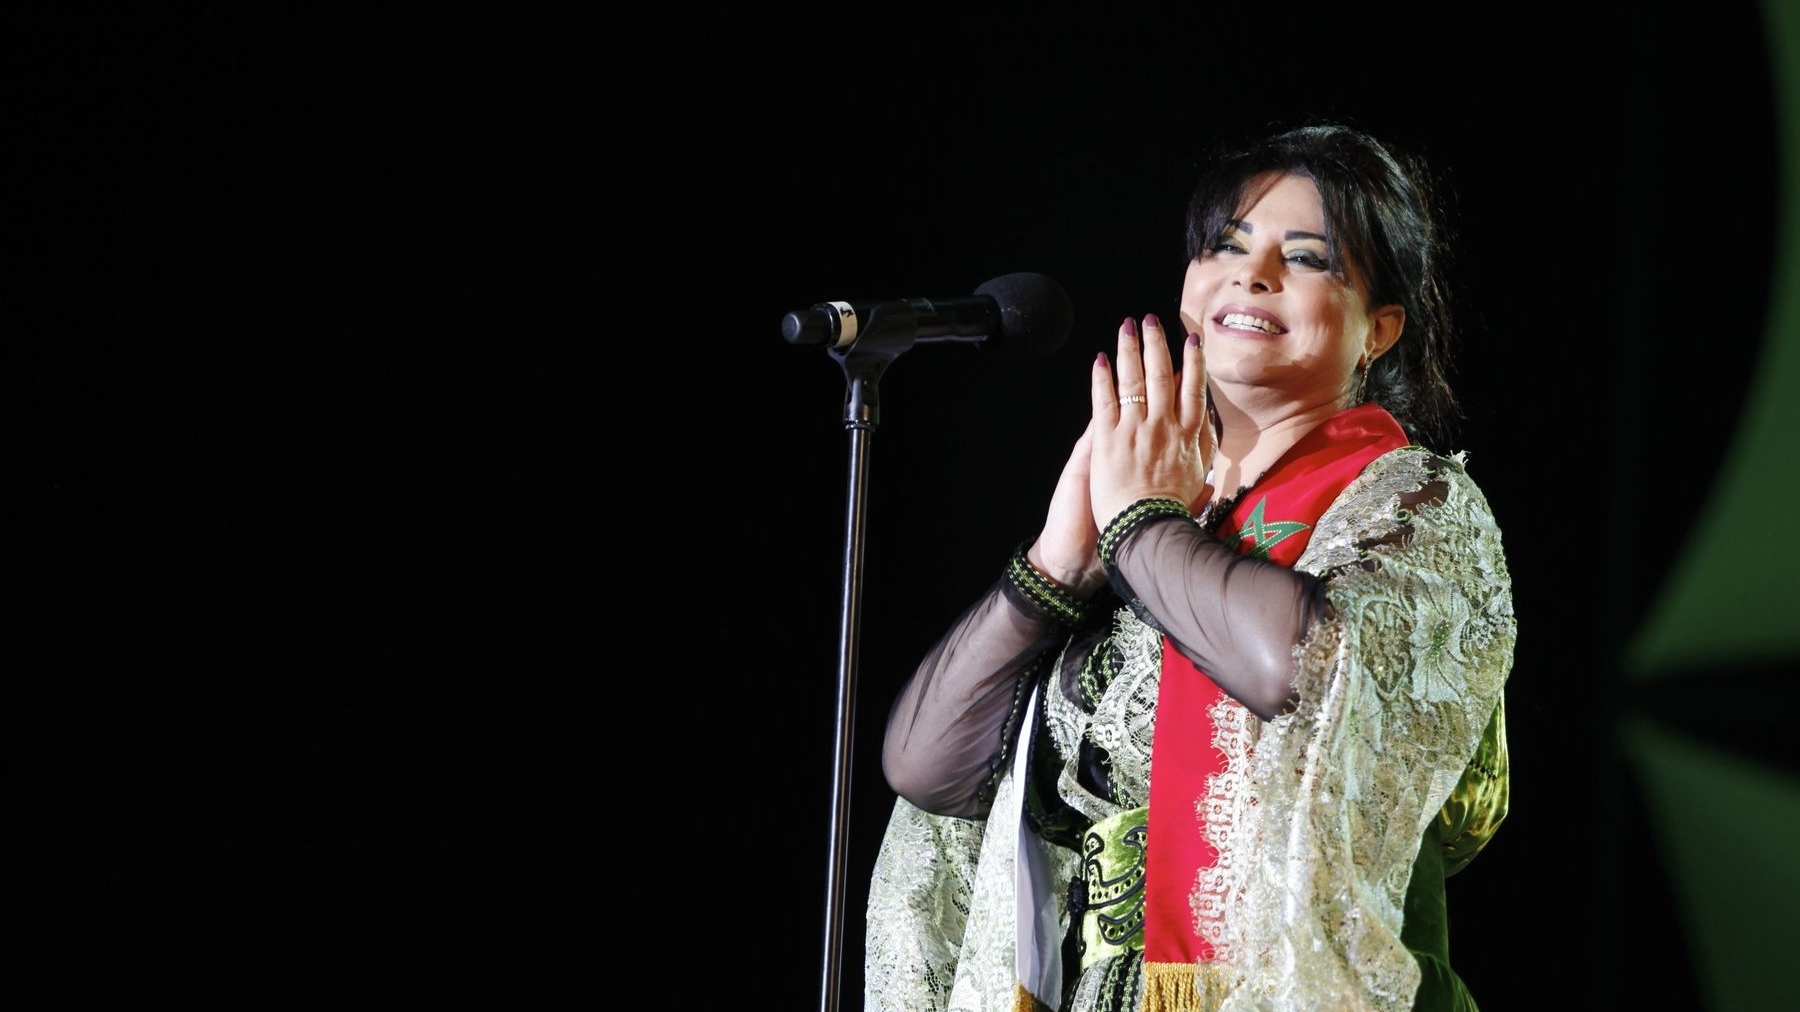 La chanteuse Latifa Raafat ravie d'être à Timitar
